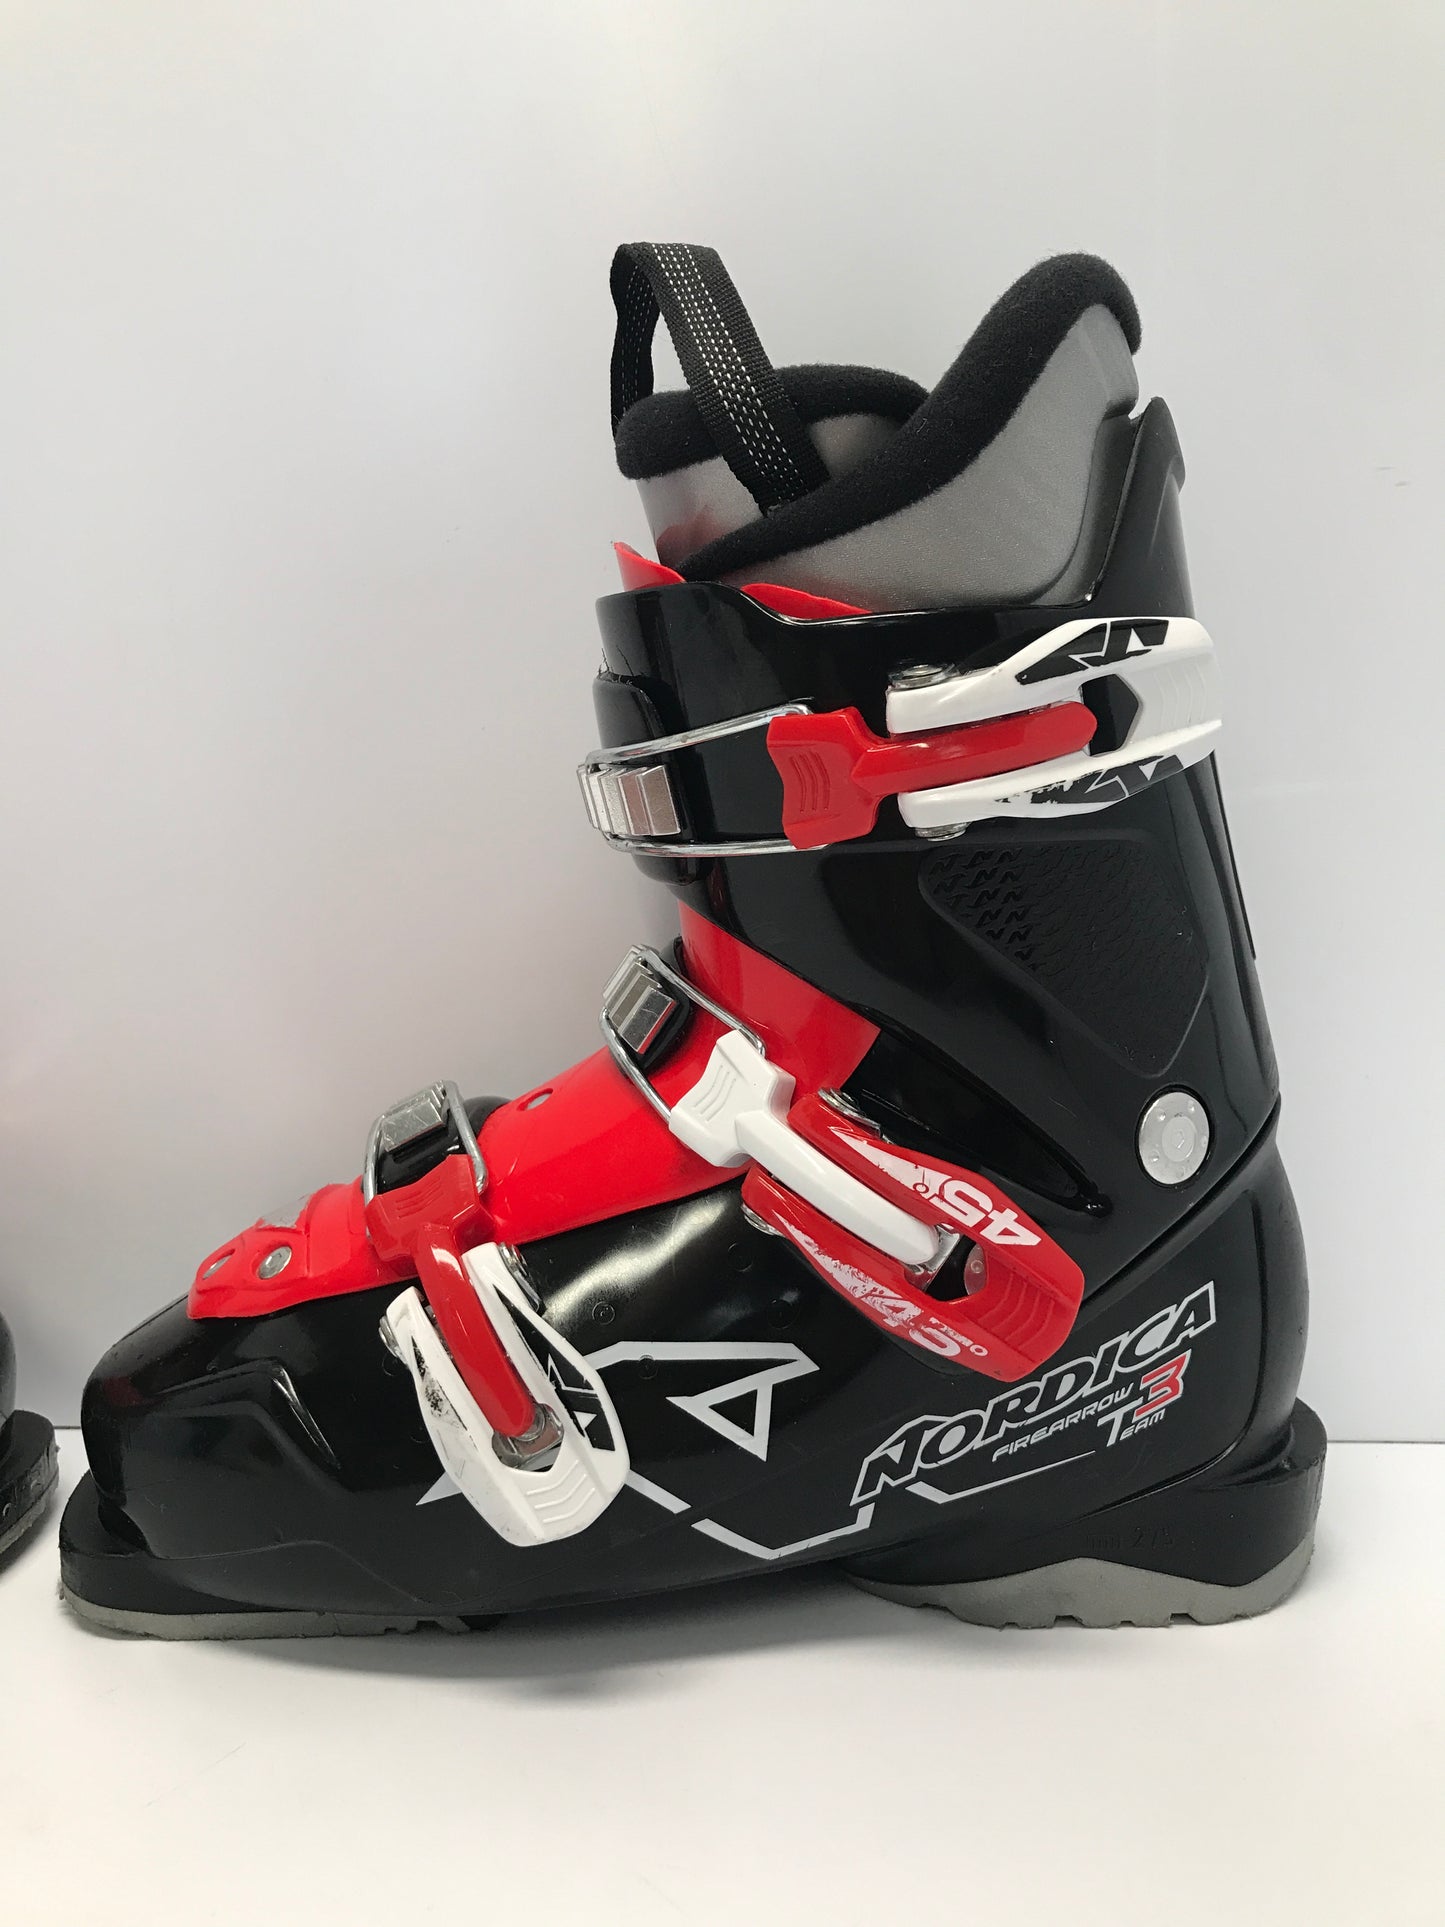 Ski Boots Mondo Size 25.0 Men's Size 7 Ladies size 8 290 mm Nordica Firearrow Black Red White Nice!